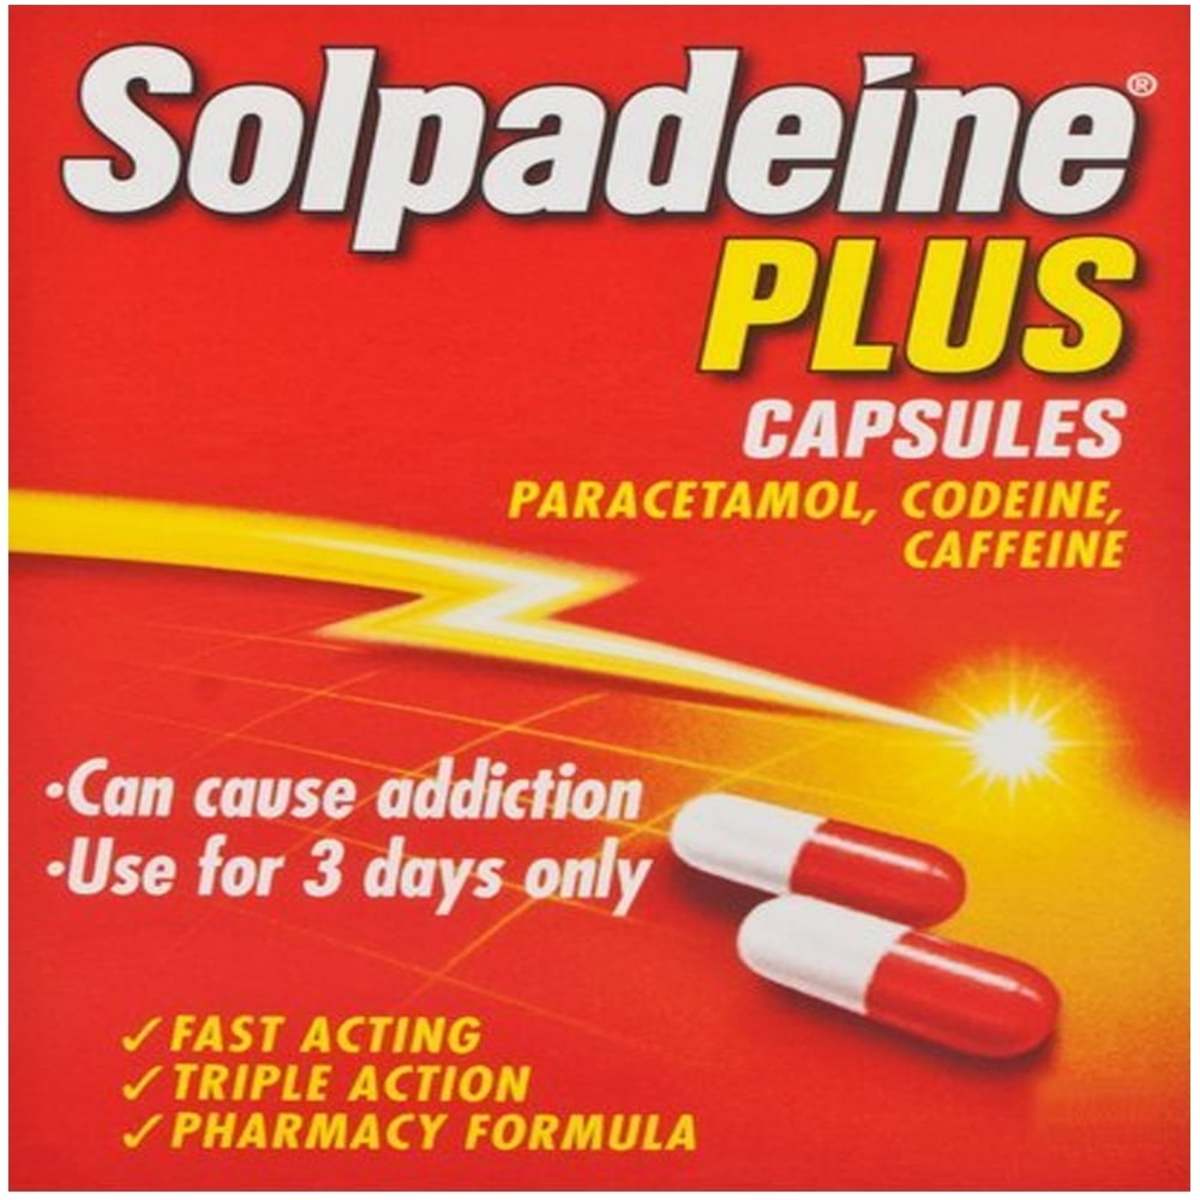 Each tablet contains Codeine phosphate hemihydrate 12.8 mg. and Paracetamol/ acetaminophen 500 mg.  